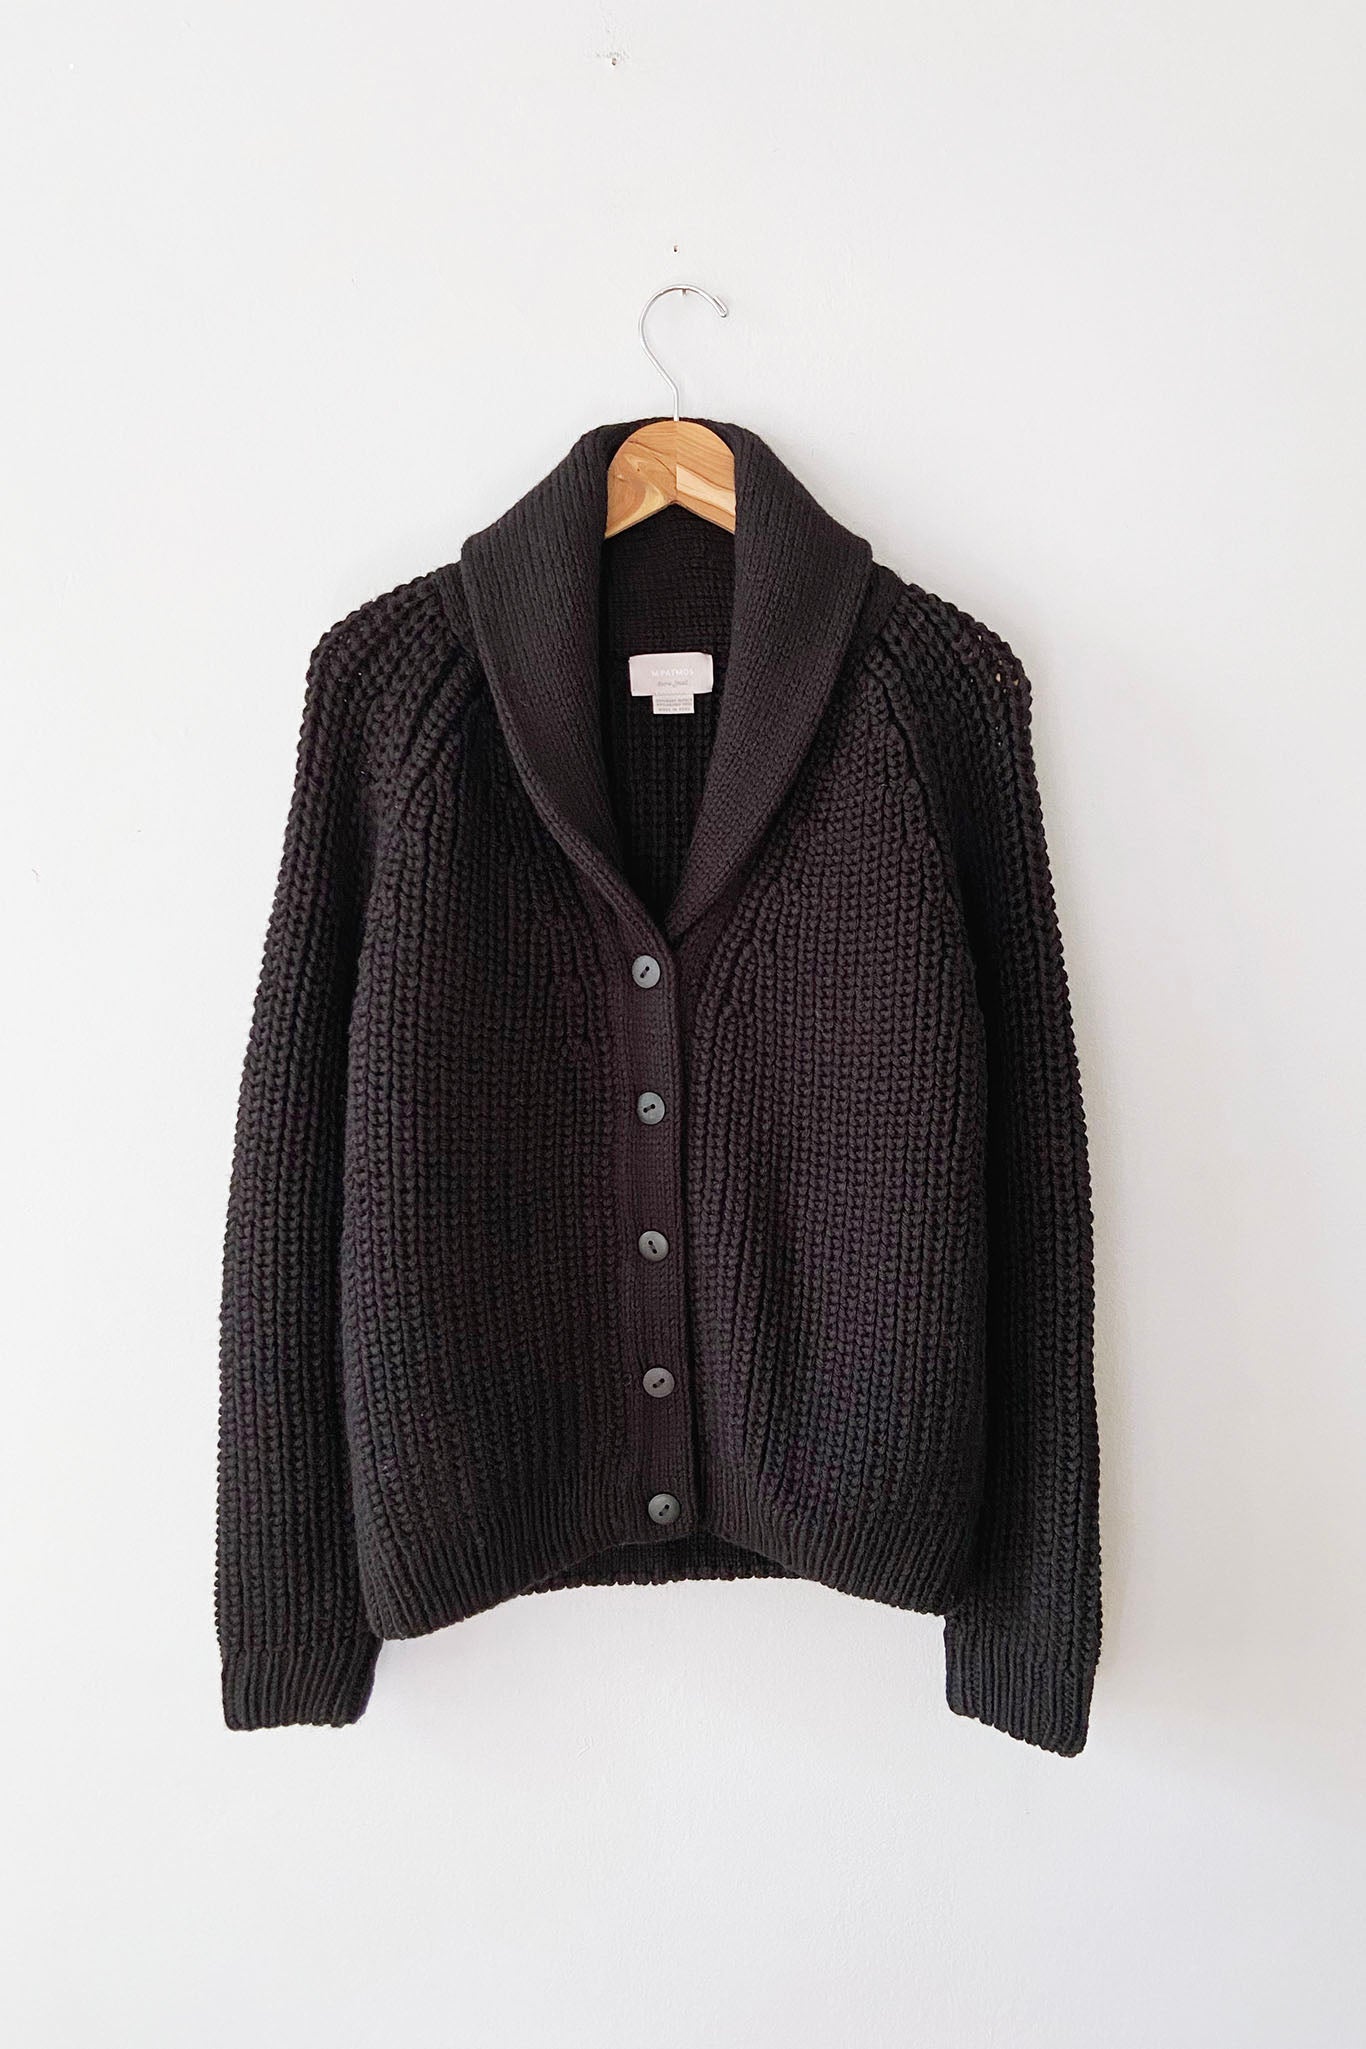 Luxurious chunky knit wool cardigan with shawl collar. Made in Peru. Perfect fall sweater.